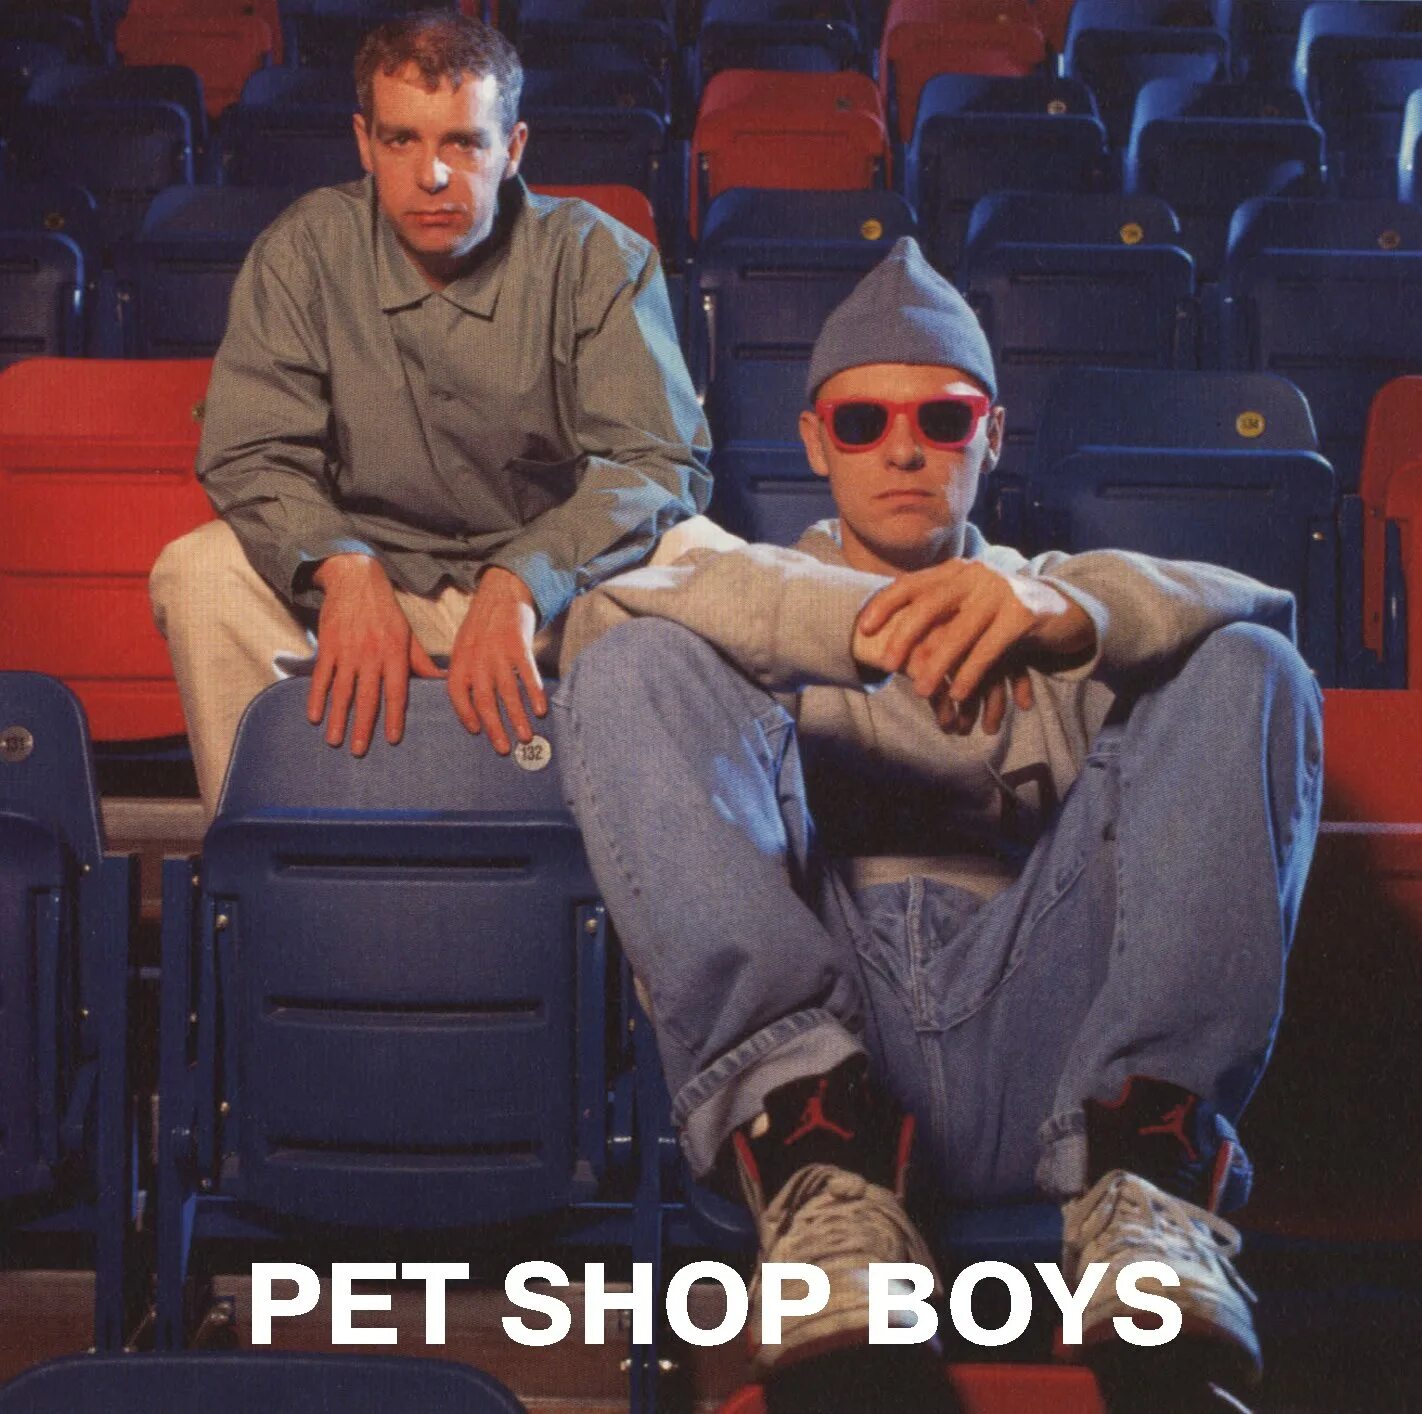 Pet shop boys. Pet shop boys фото. Pet shop boys Single. Pet shop boys хиты. Пет шоп бойс 90